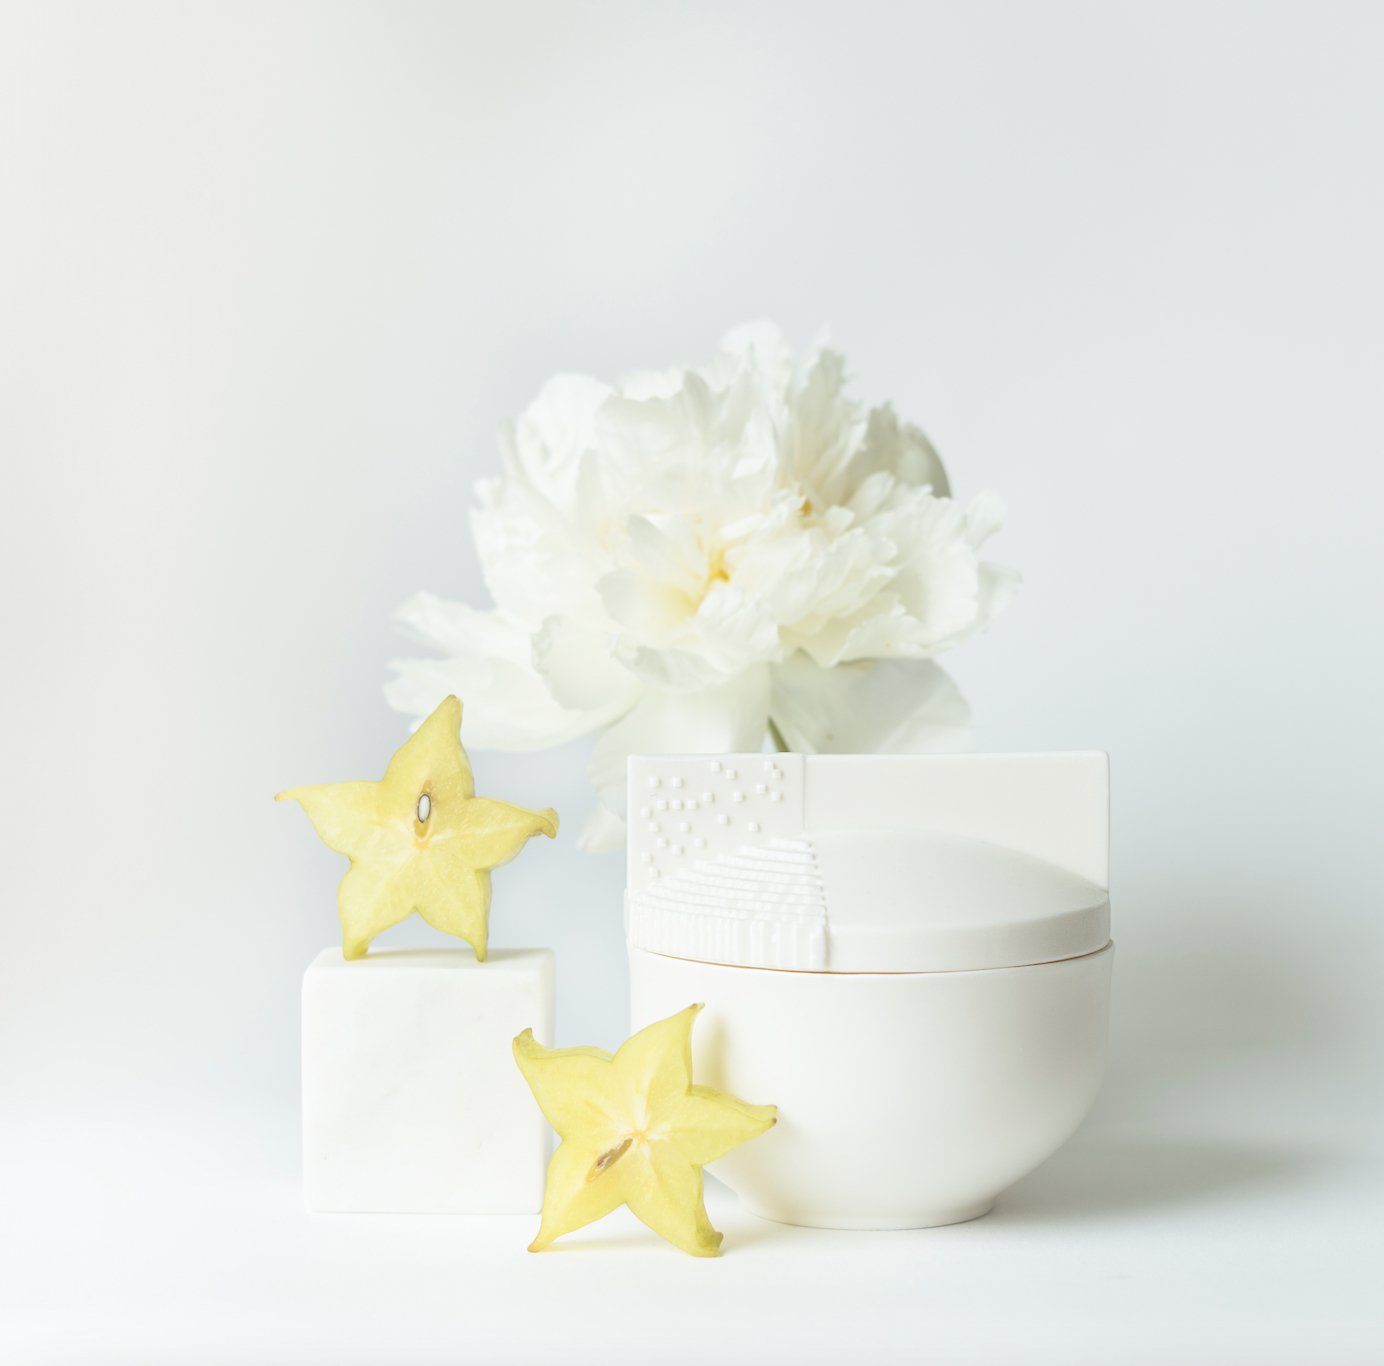 Biała porcelana - pojemniki - Kyuka Design